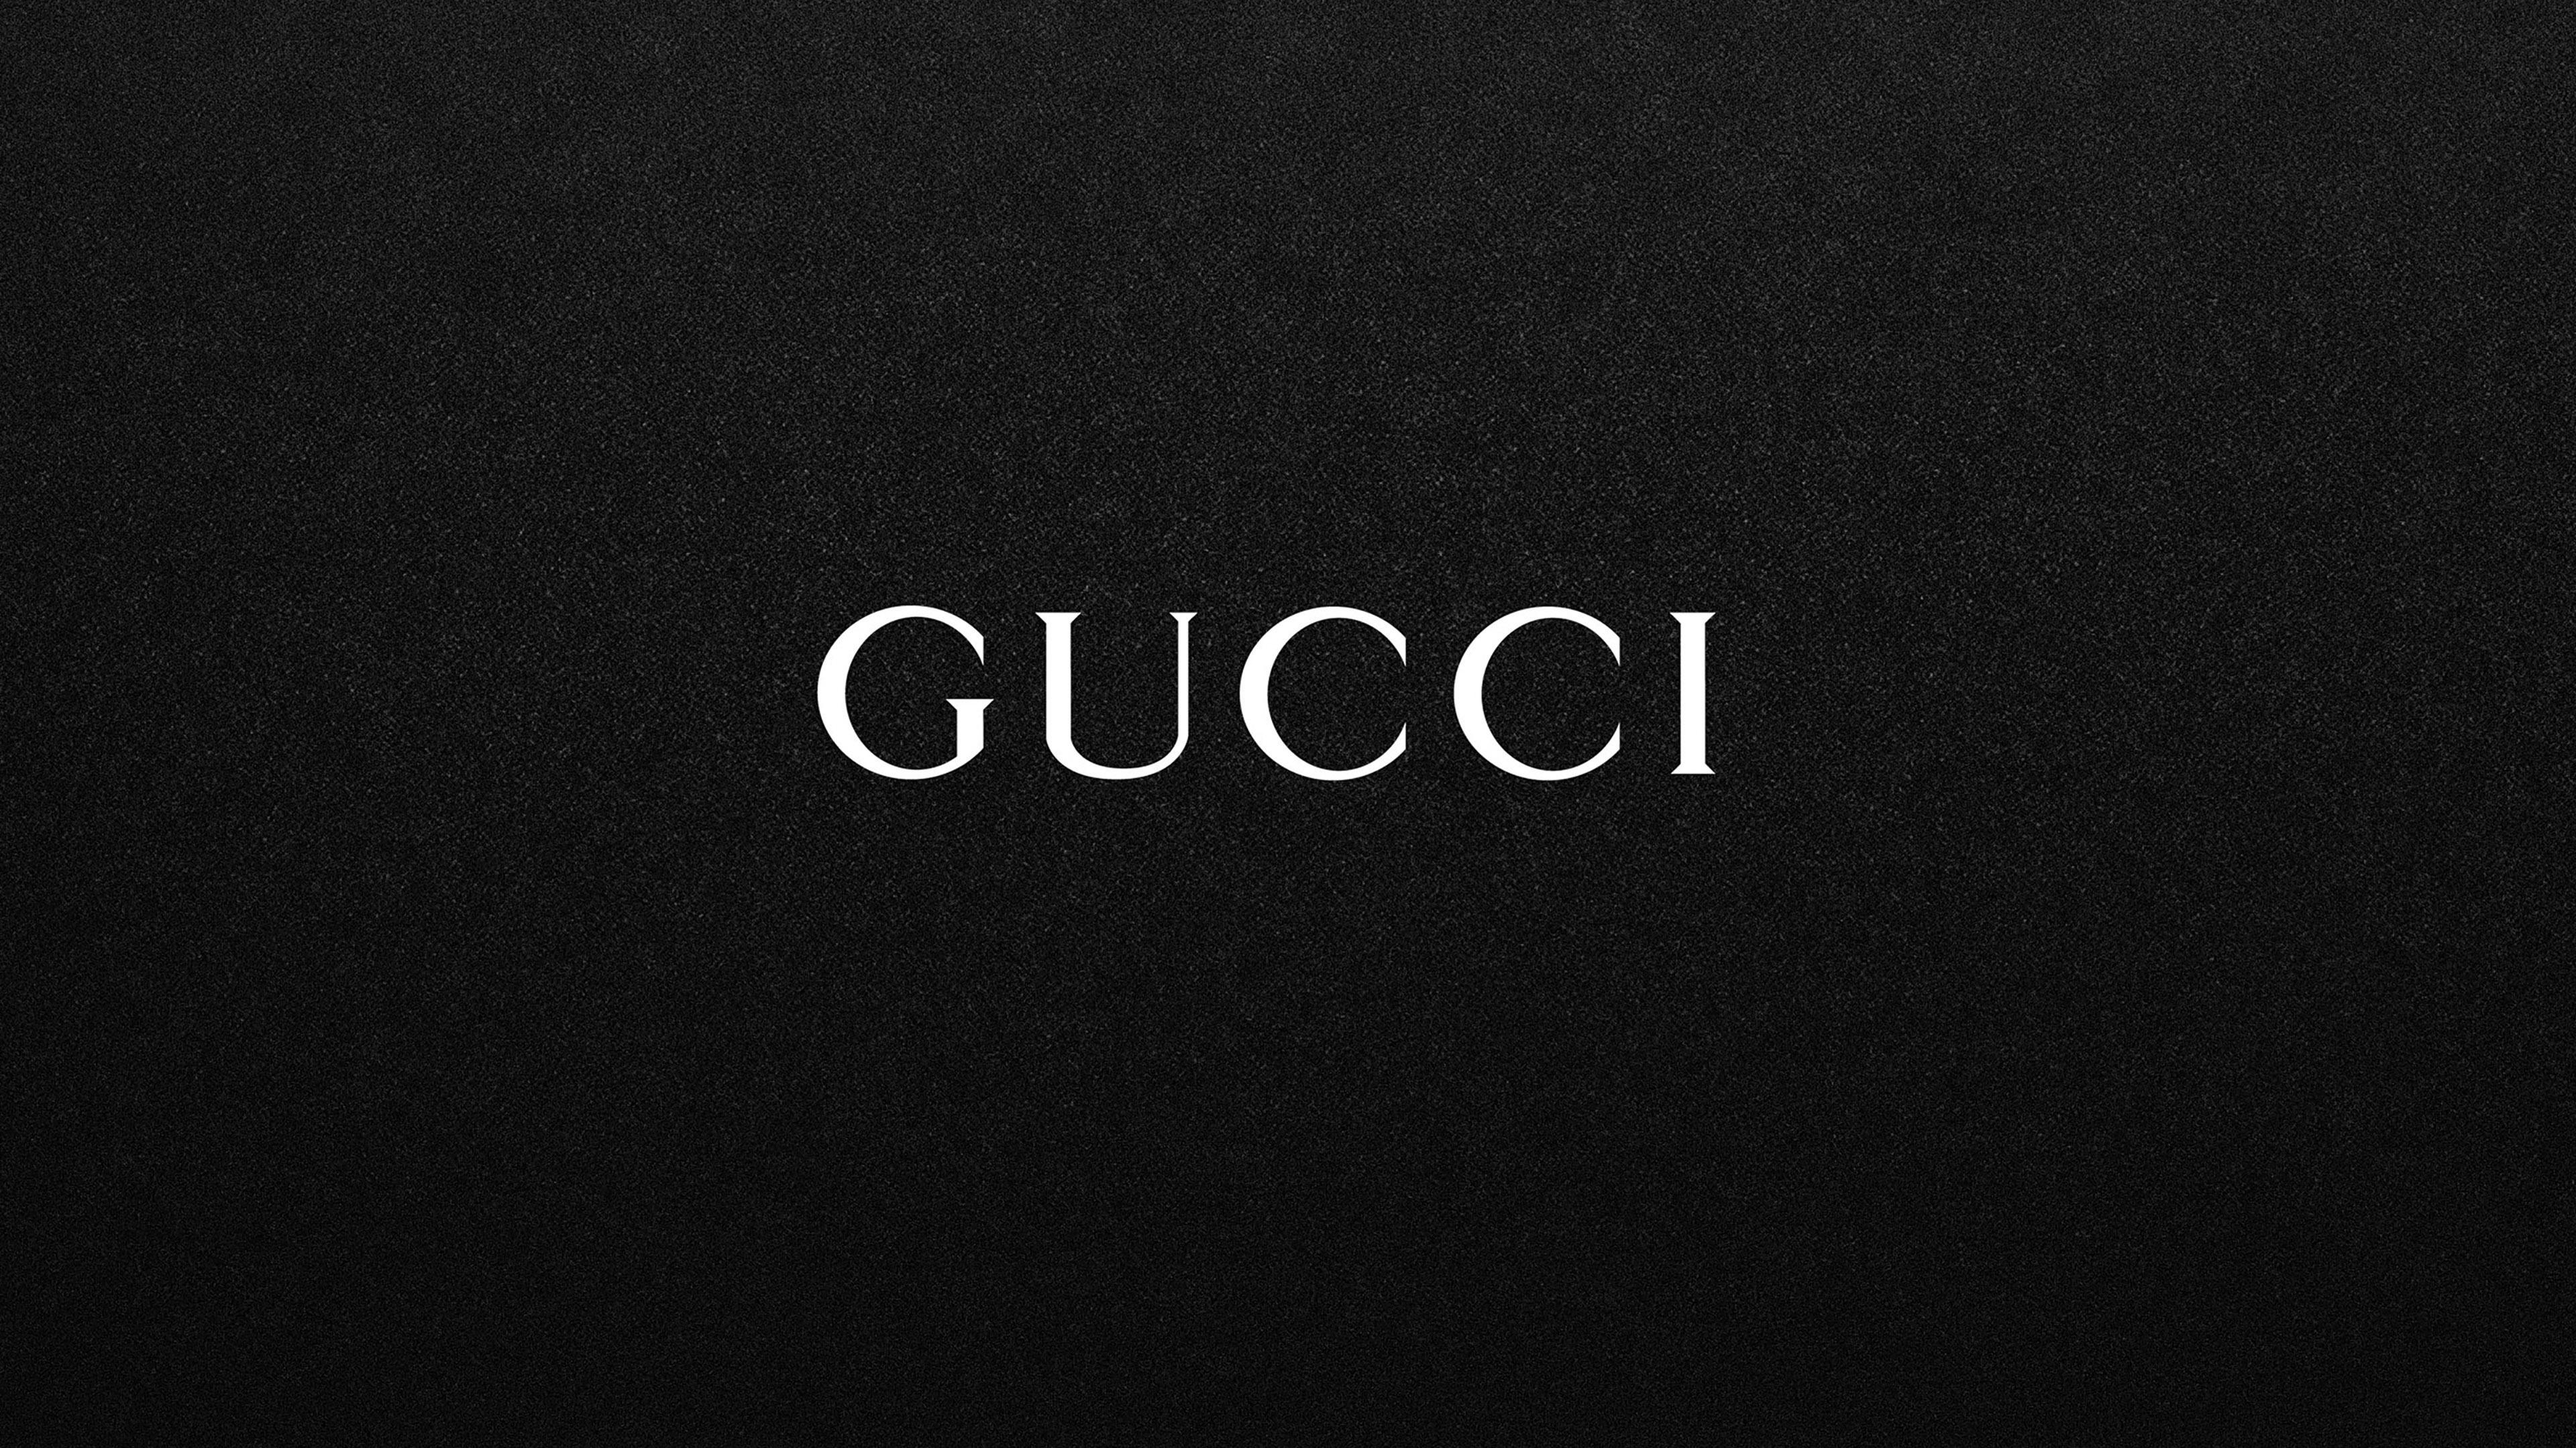 Gucci Wallpaper Image Inside